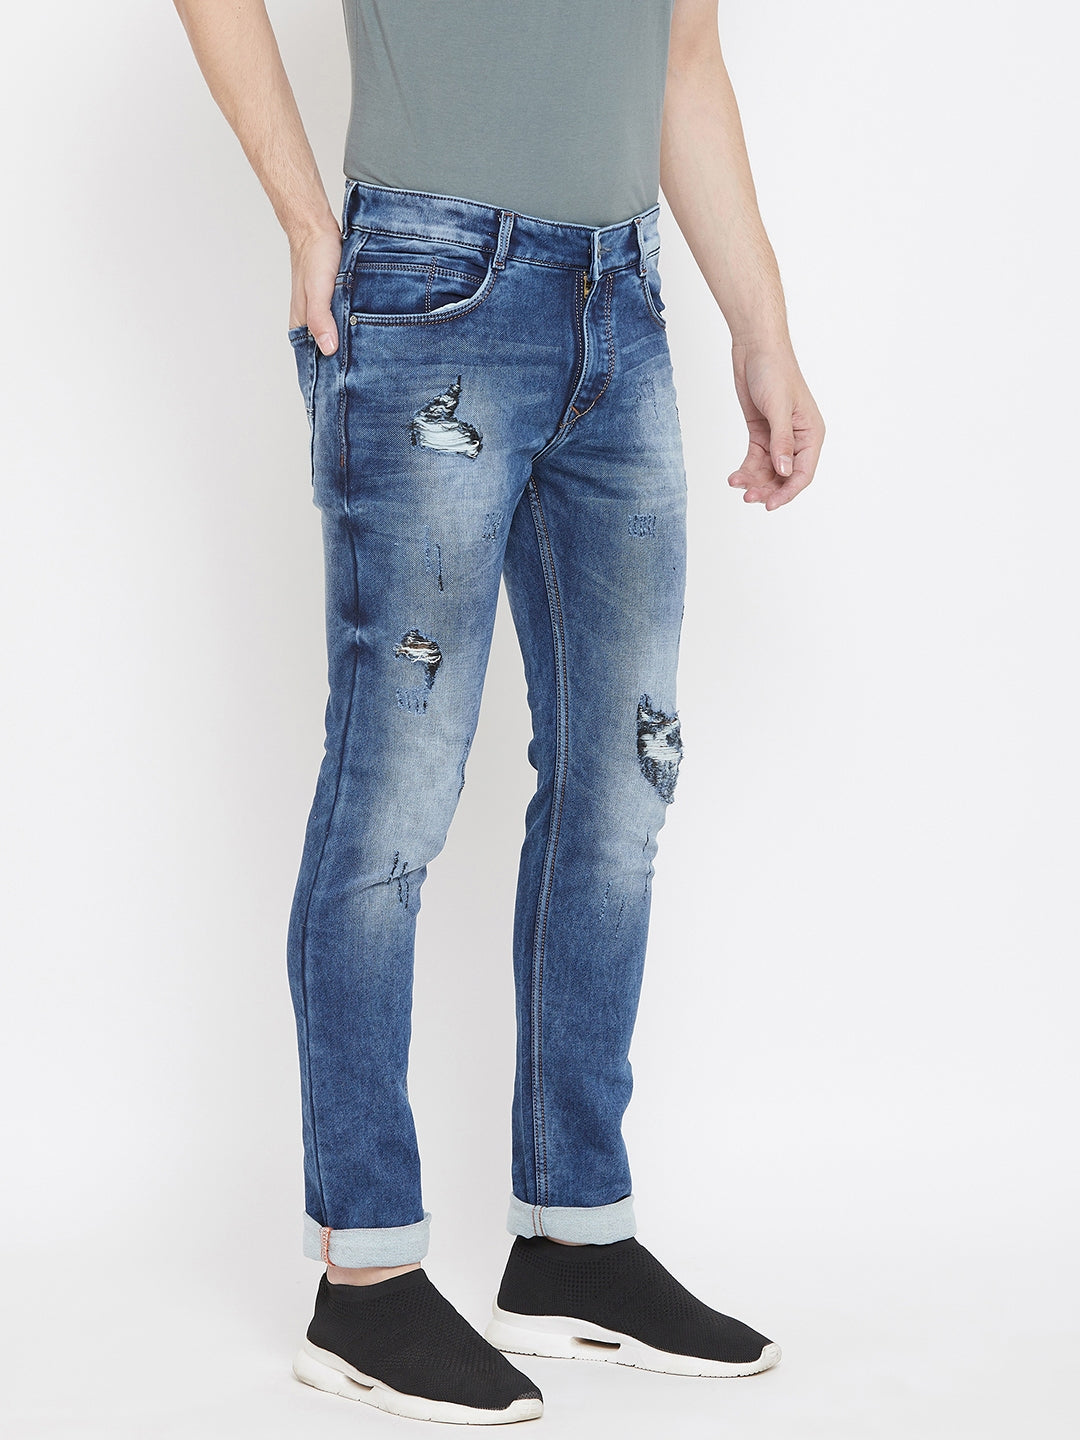 Blue Ripped Slim Fit Jeans - Men Jeans